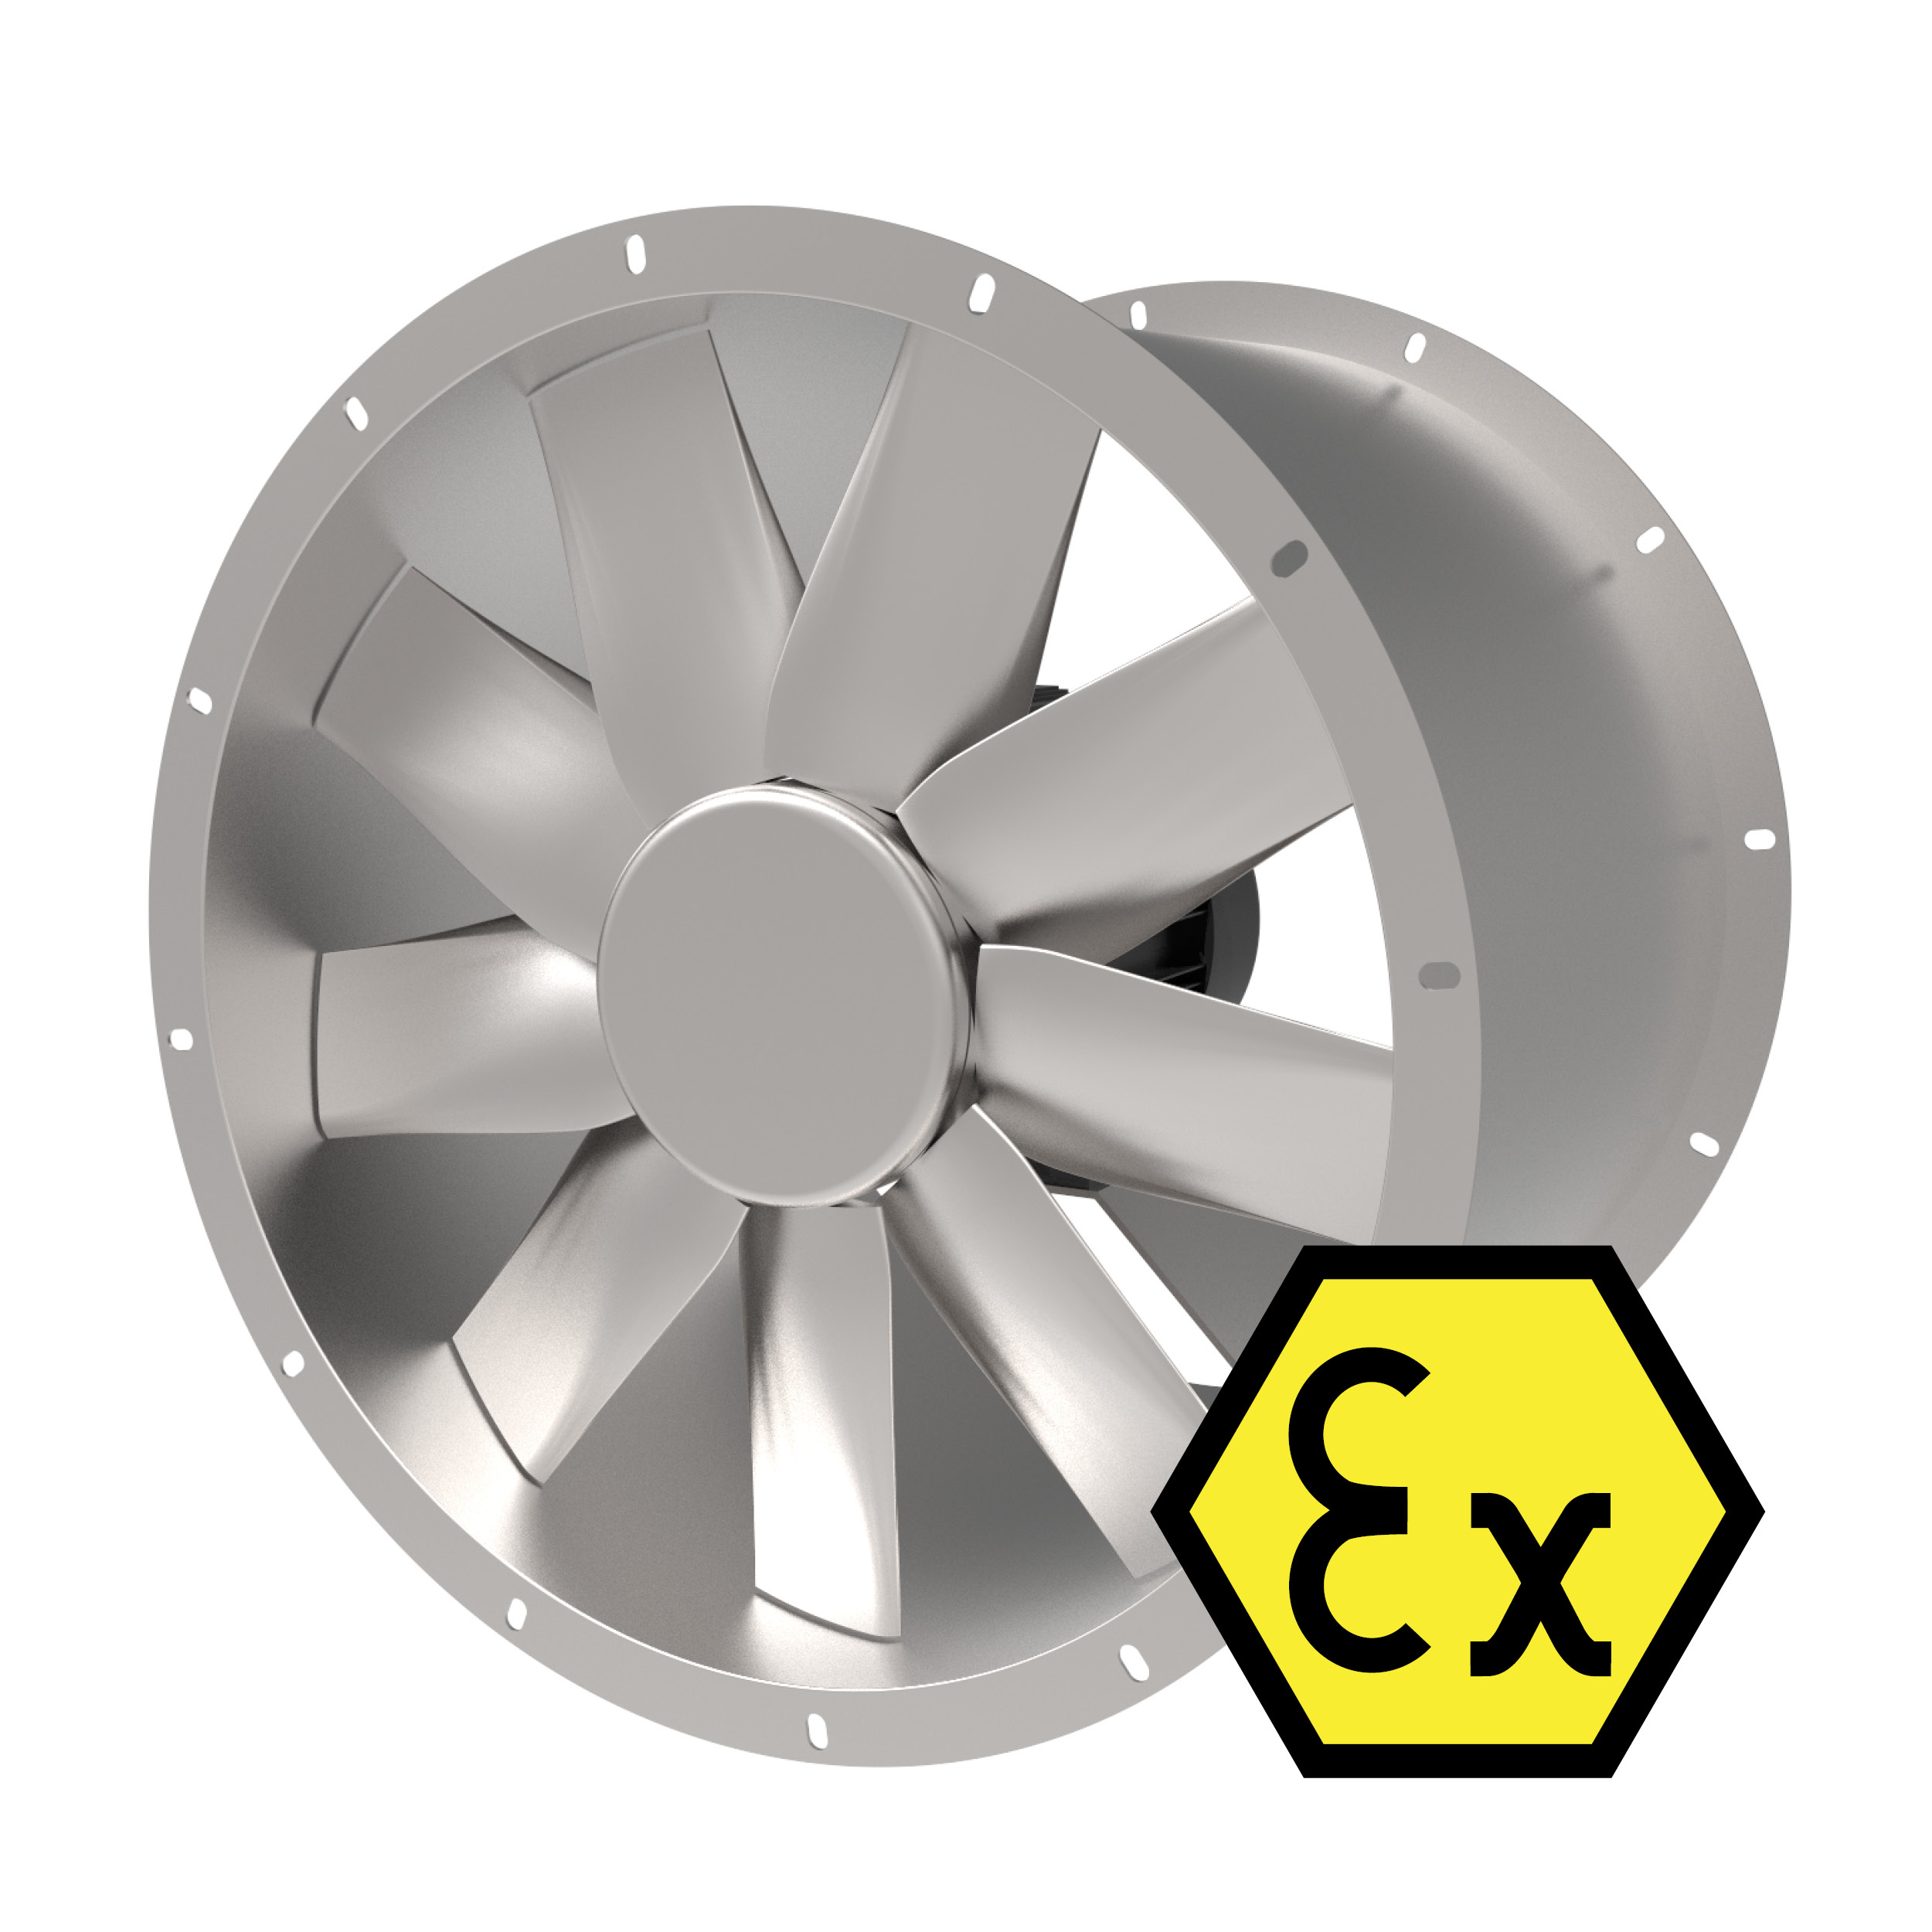 Atex 2014 34 Eu Compliant Fans Motors From Axair Fans throughout measurements 2500 X 2500